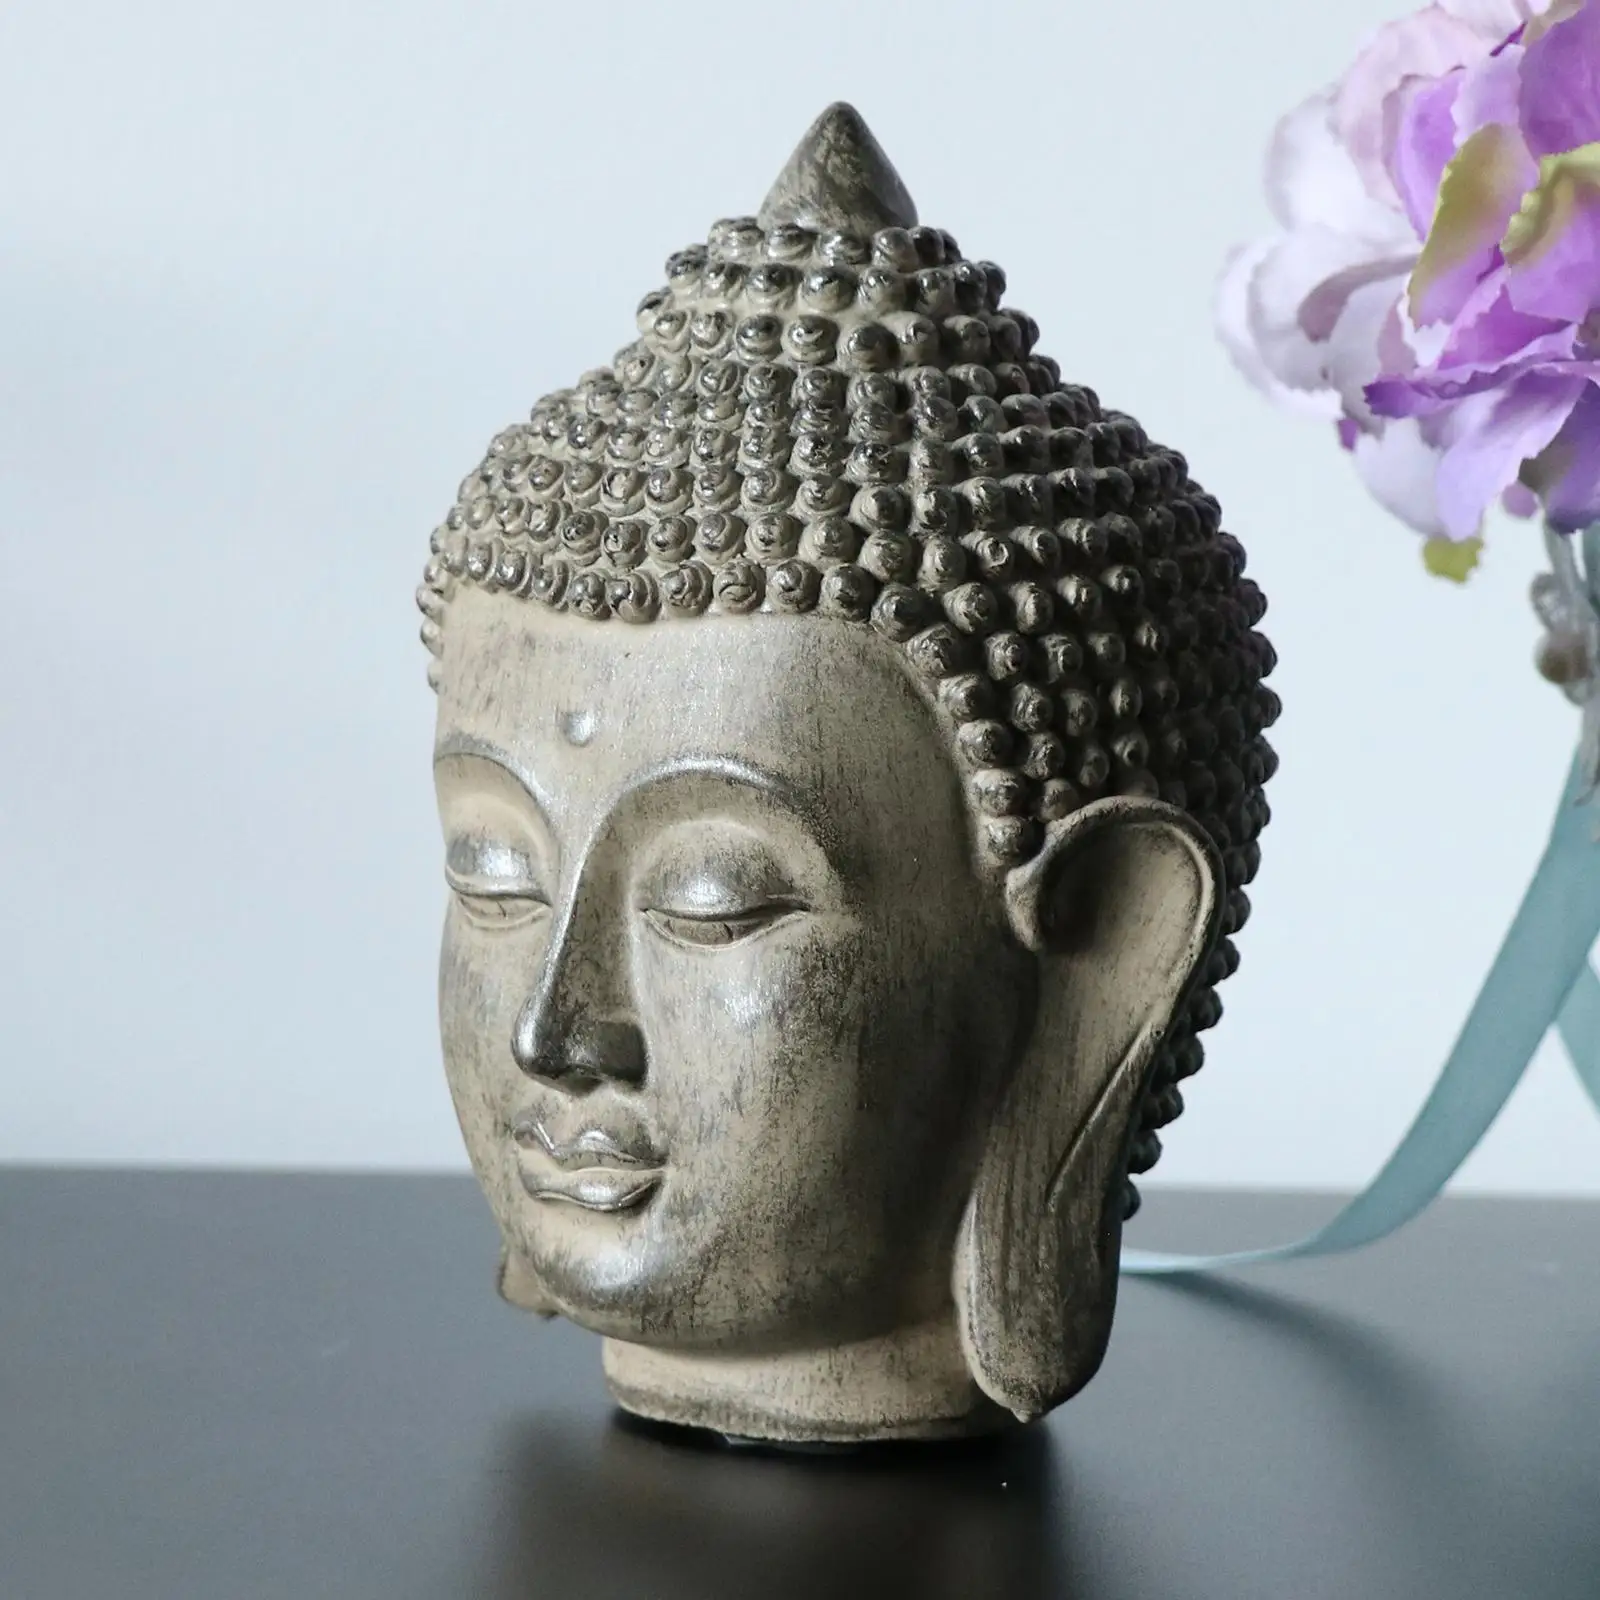 Buddha Head Statue Figurine Fengshui Home Desktop Decorative Ornament